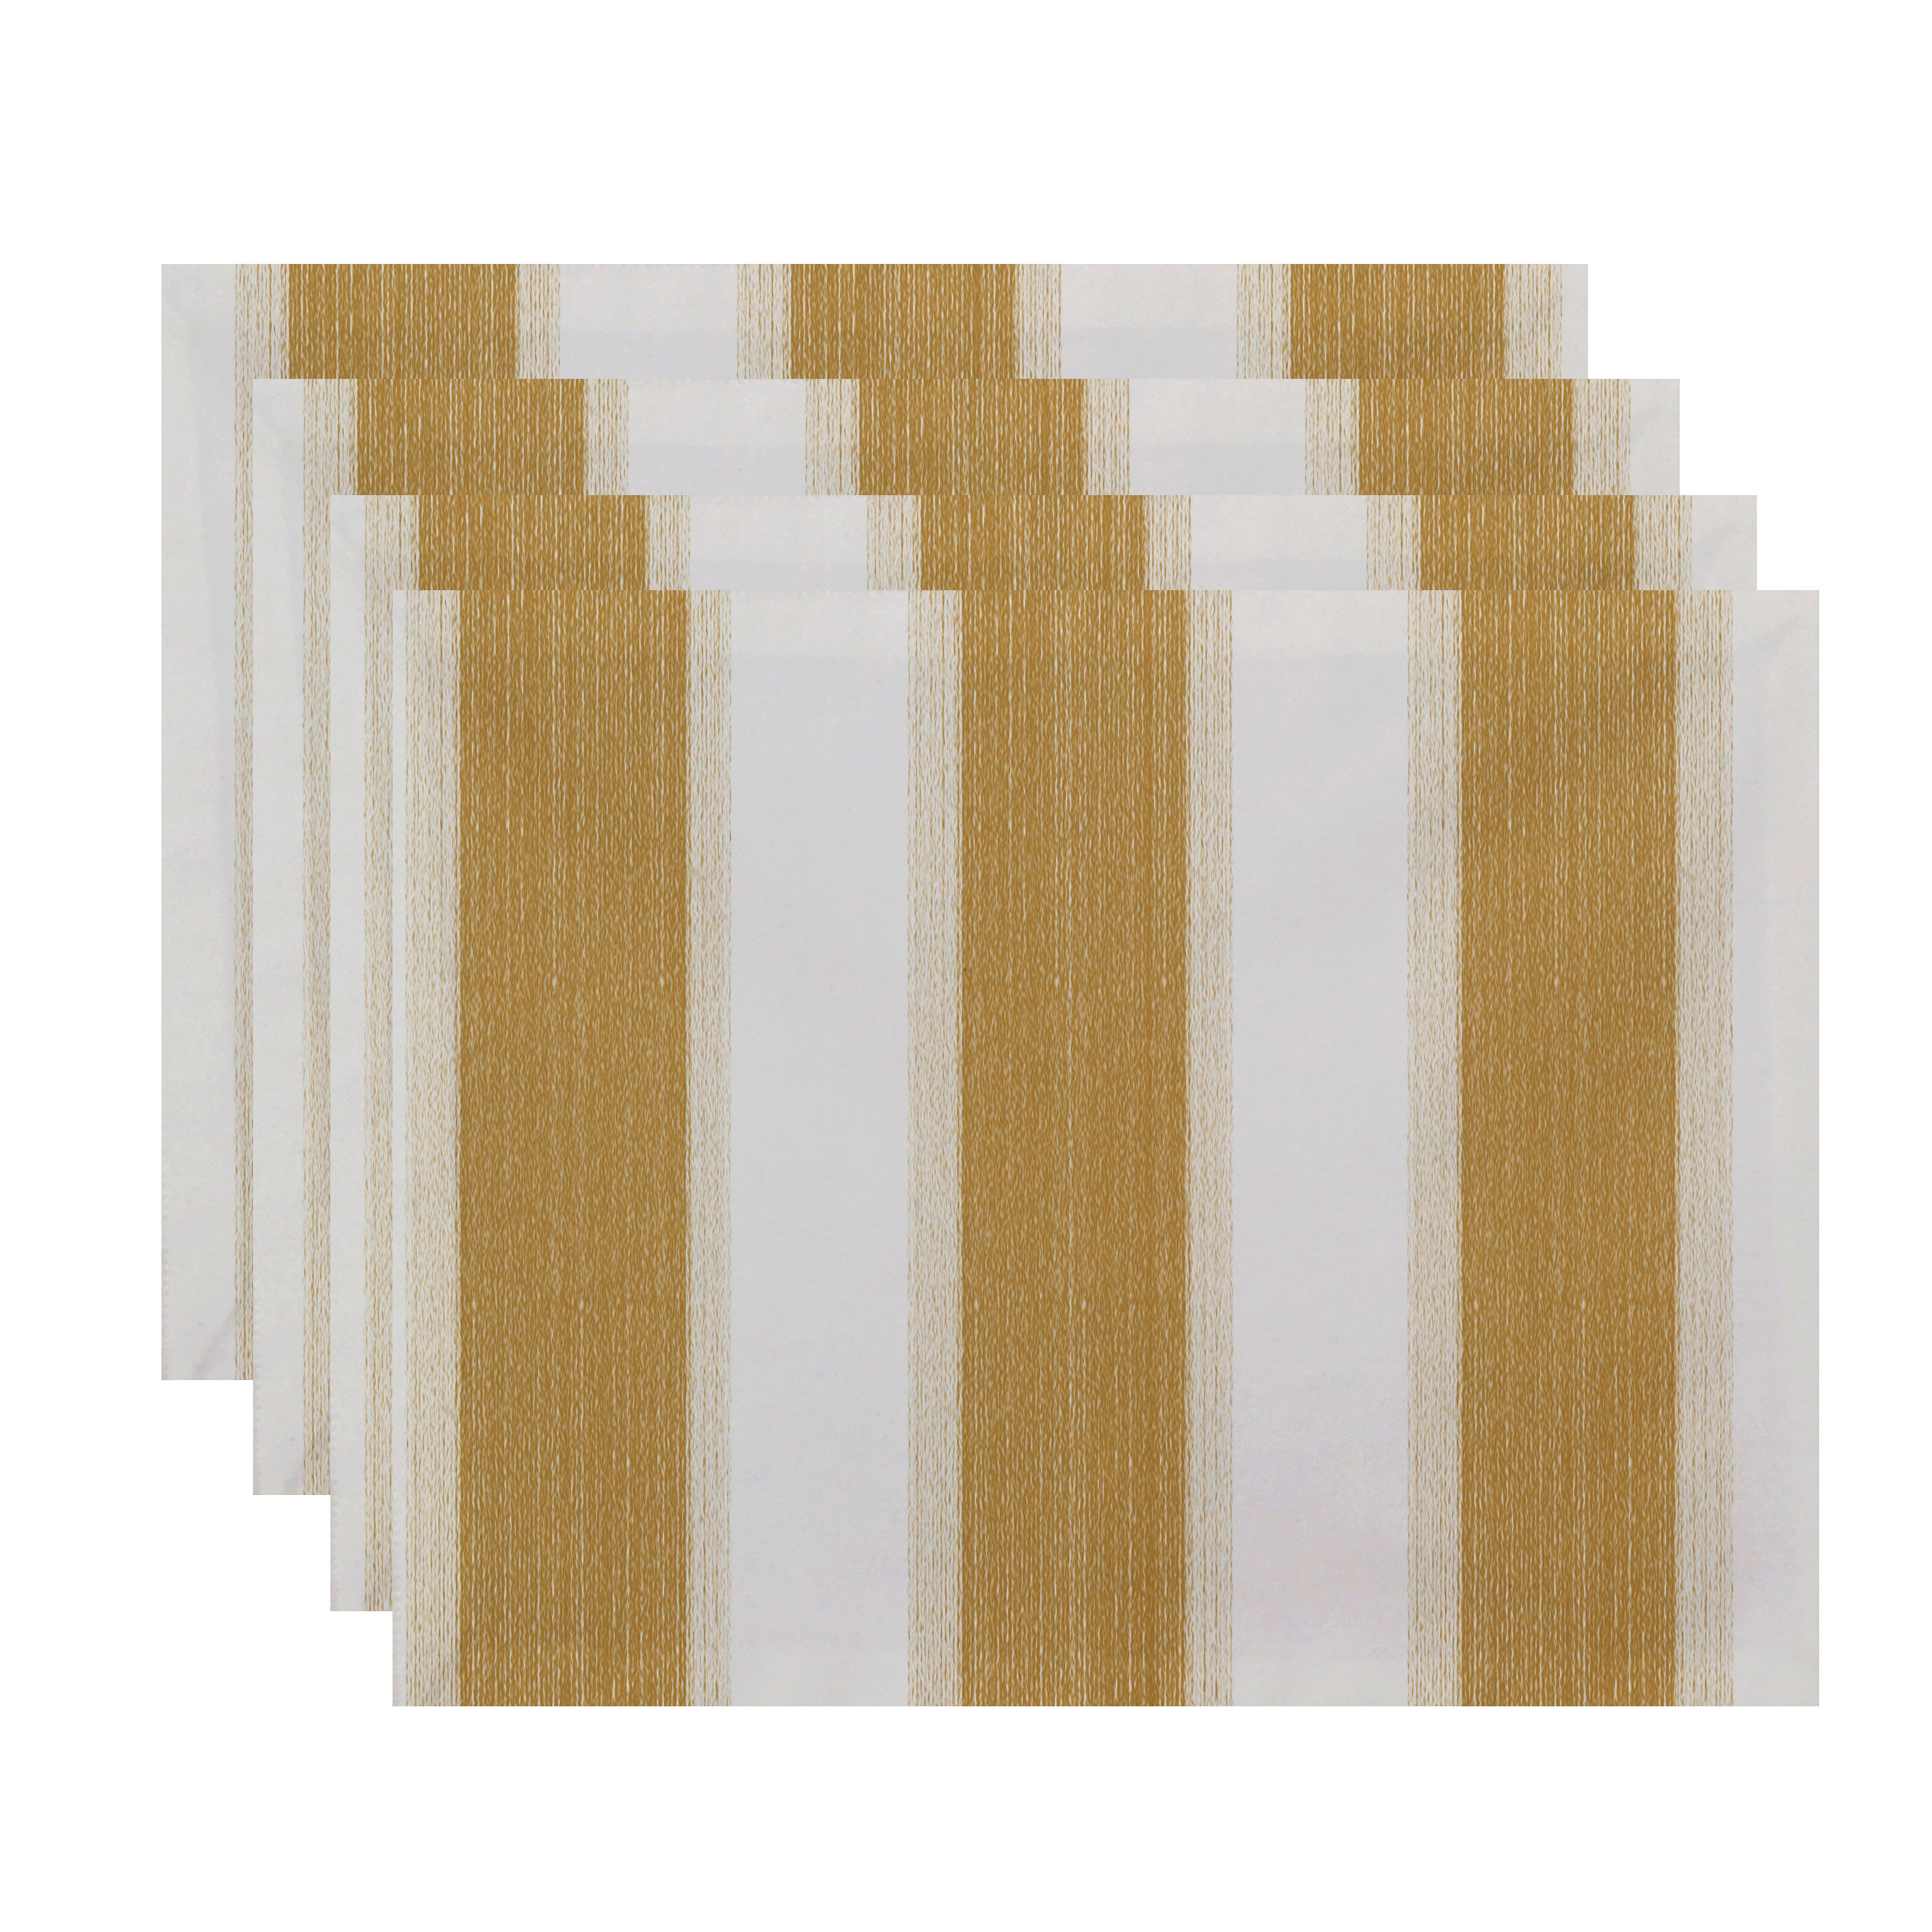 Case of 48 Gold Metallic Non-Slip Placemats, Wheat Design